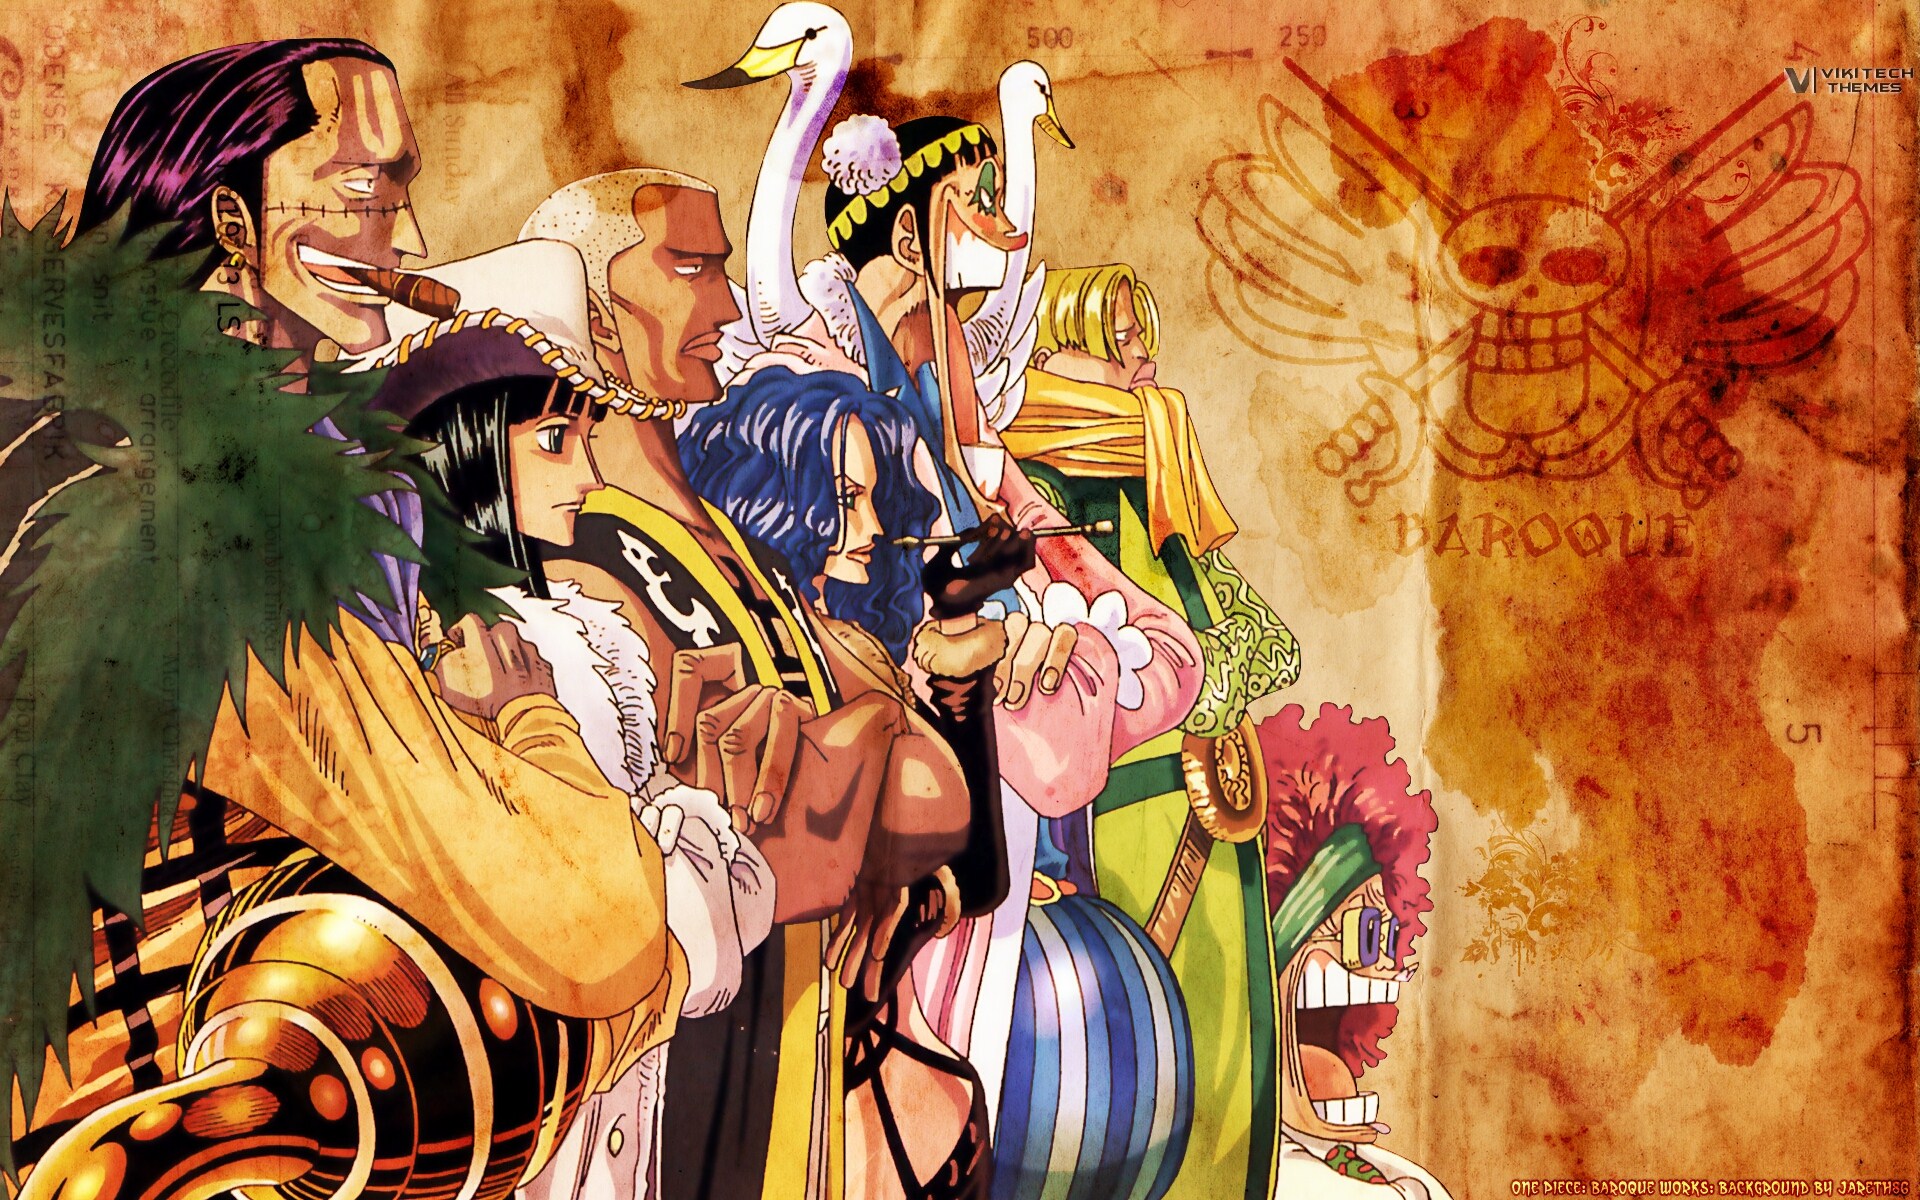 Anime One Piece Hd Wallpaper